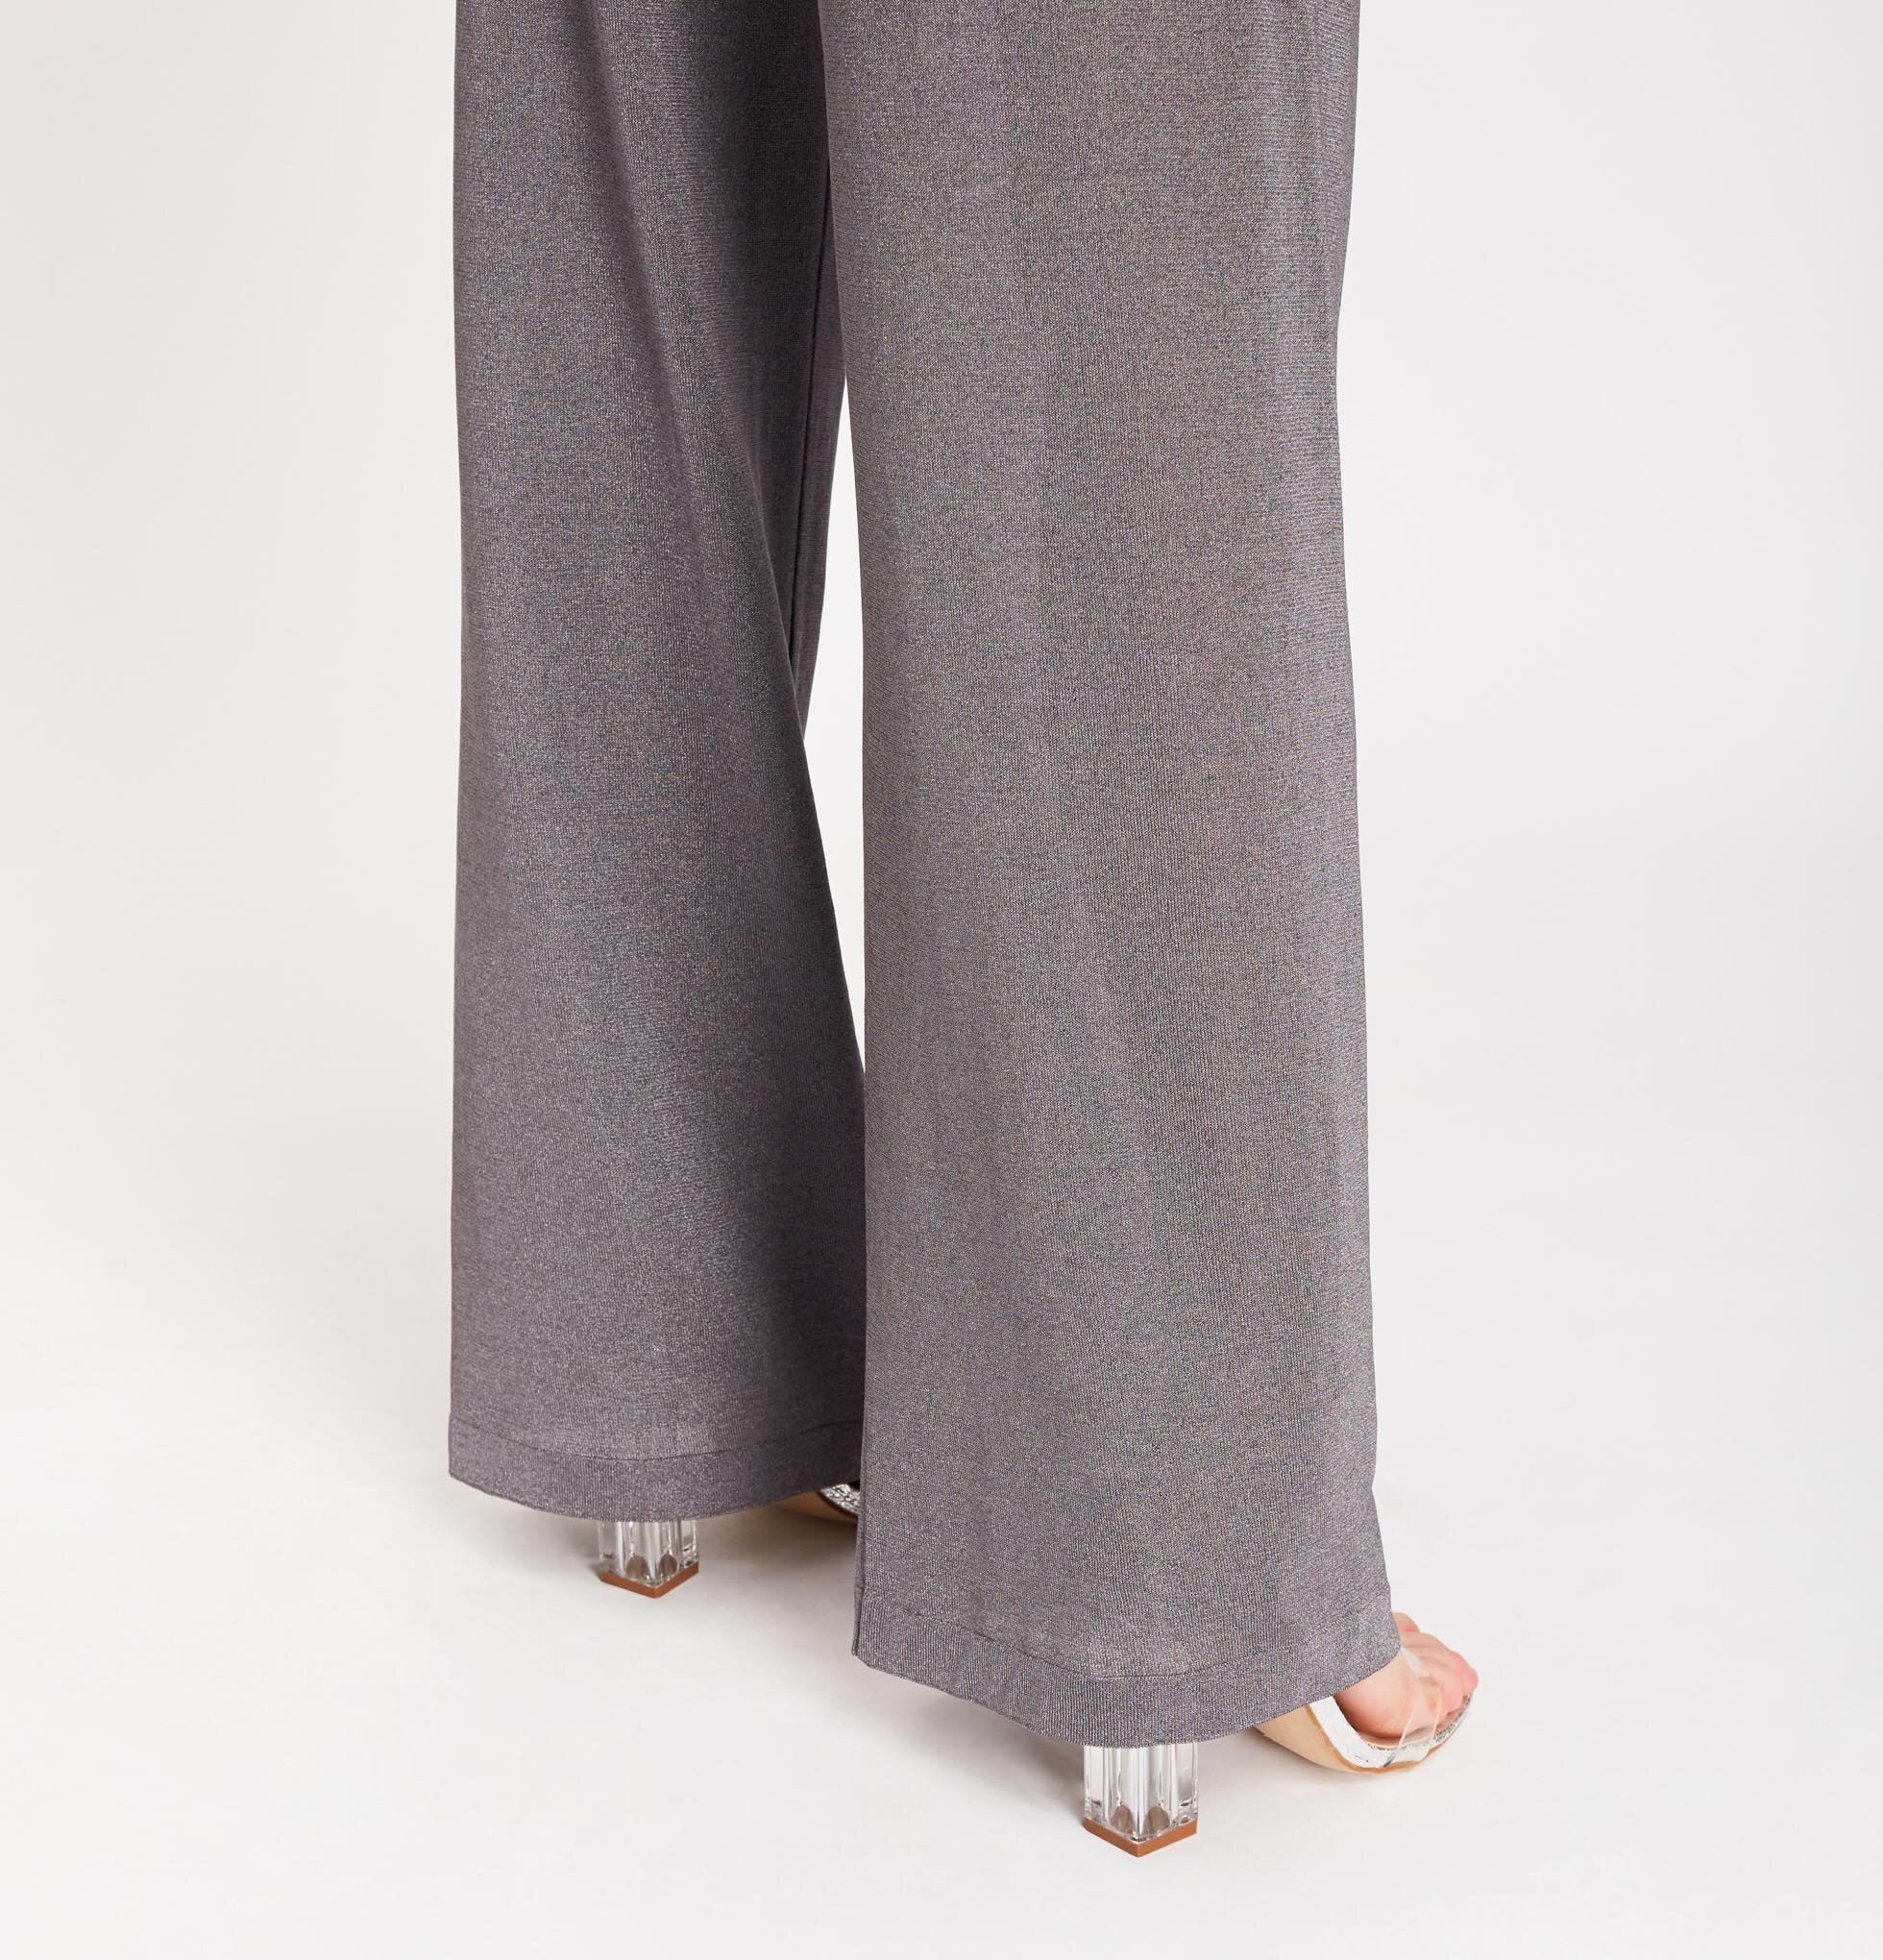 E-080-pantaloni-lurex-ampi-dettaglio-fondo-argento-1960 x 2040.jpg